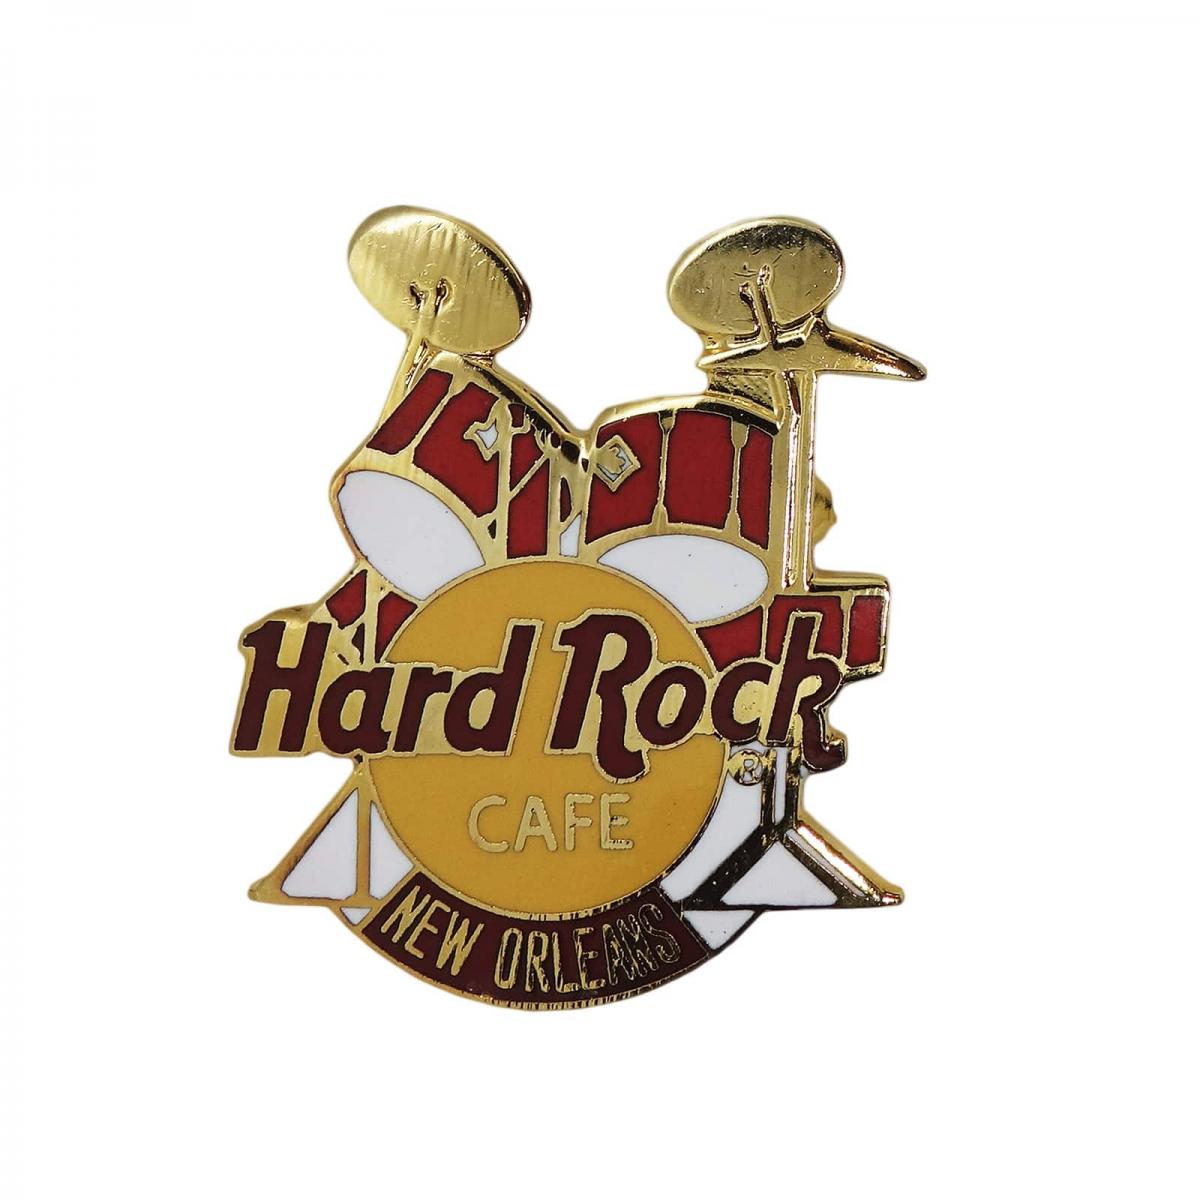 Hard Rock CAFE ドラム 赤 ブローチ ハードロックカフェ NEW ORLEANS